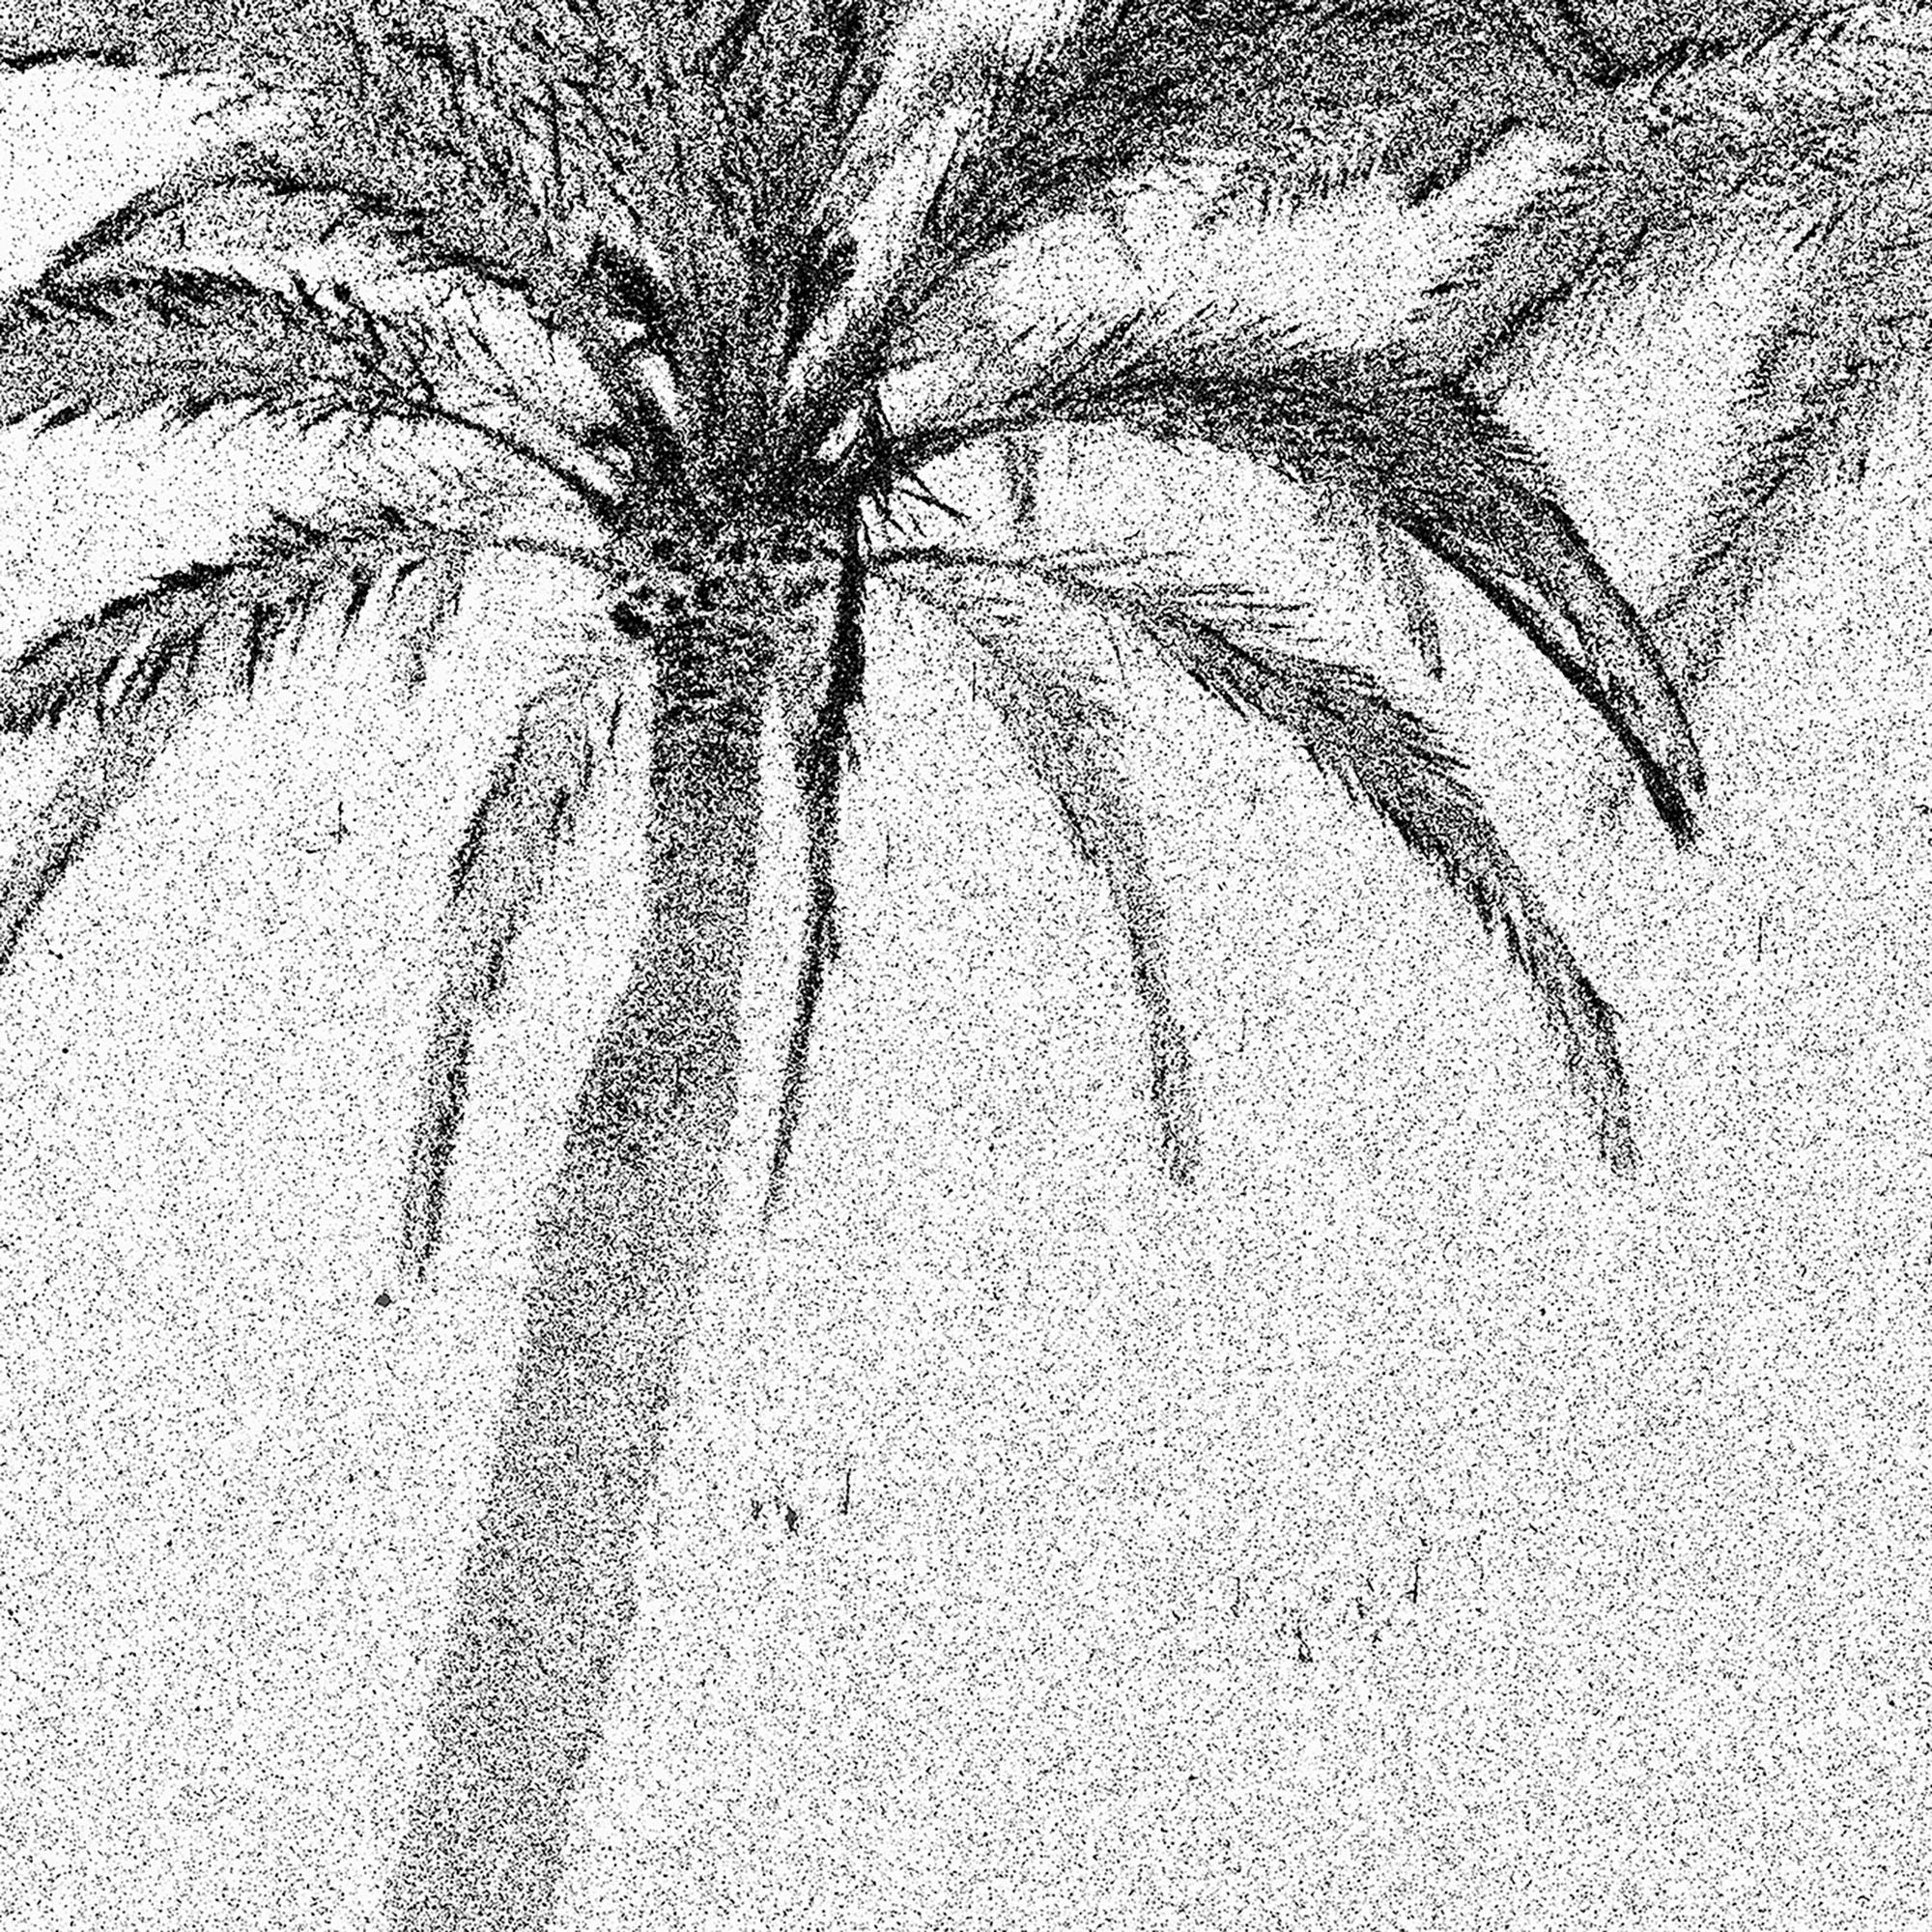 Evening Palms, Summer Showers, Barcelona - black and white photo, palms trees - Gray Black and White Photograph by Osheen Harruthoonyan